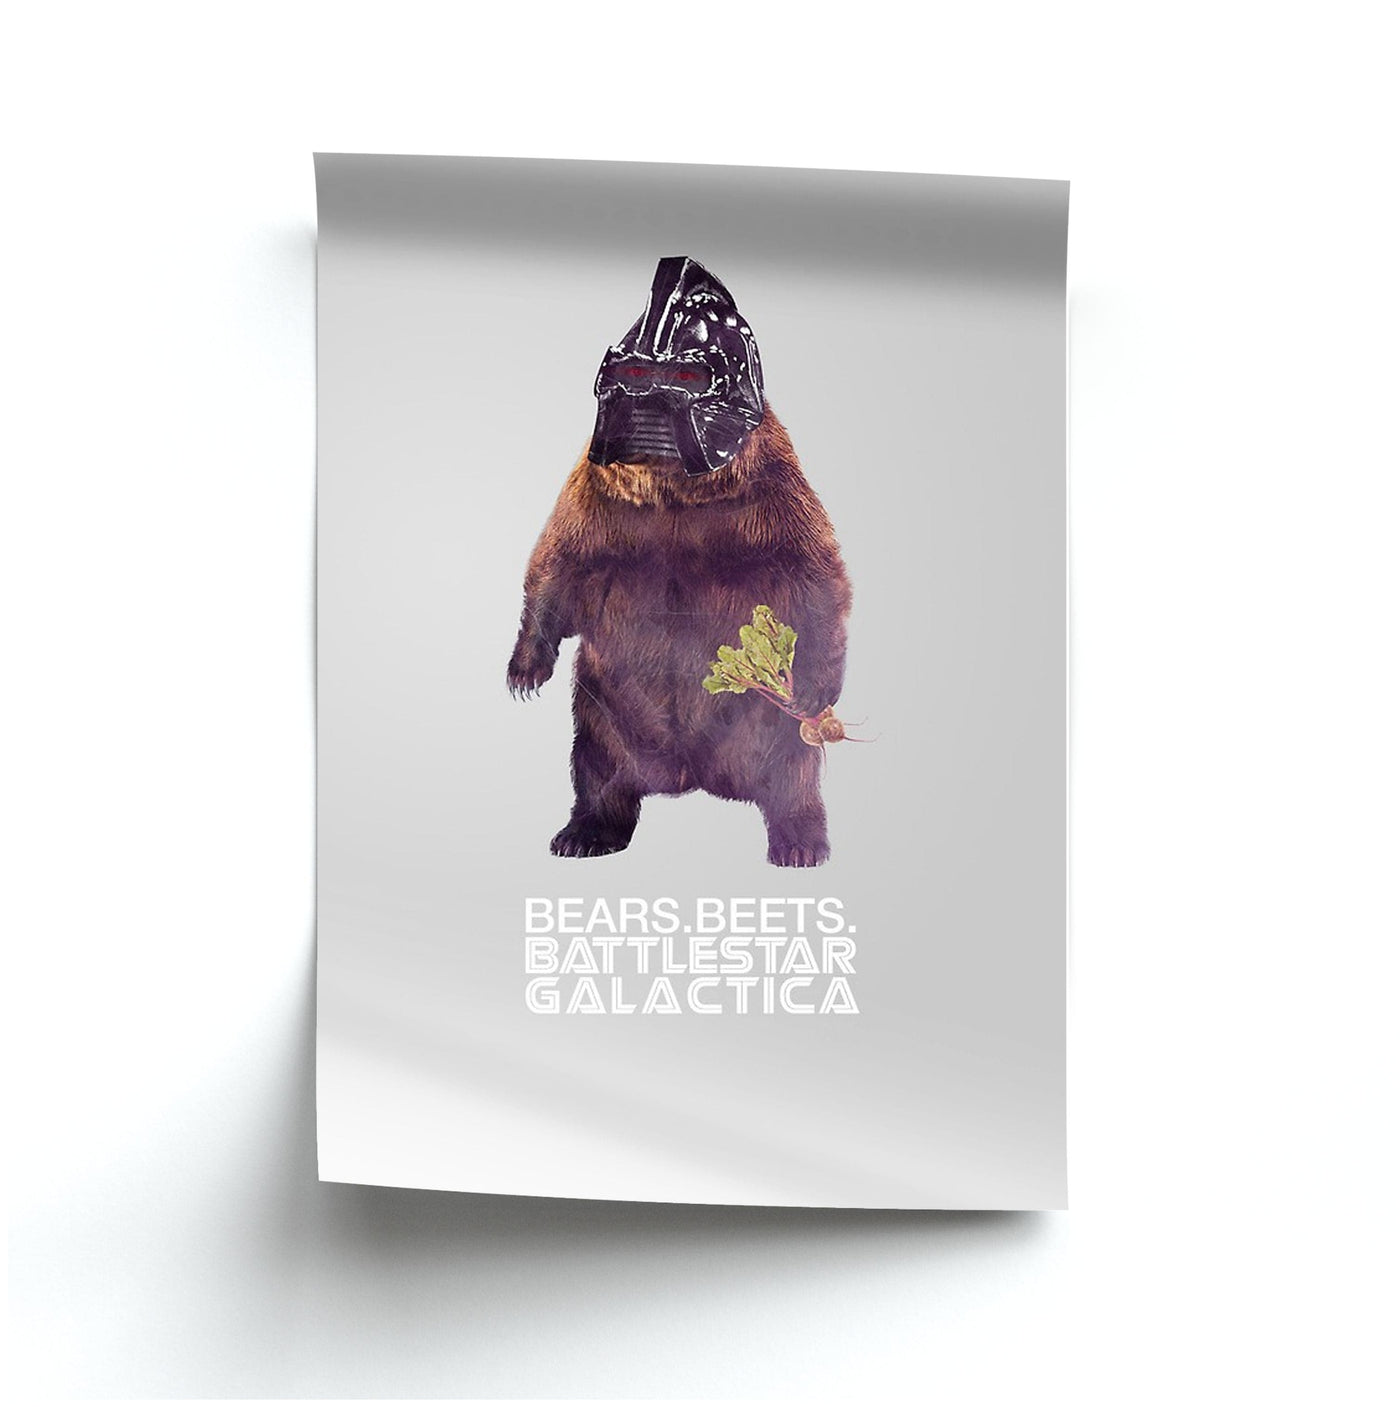 Bears Beets Battlestar Galactica - The Office Poster